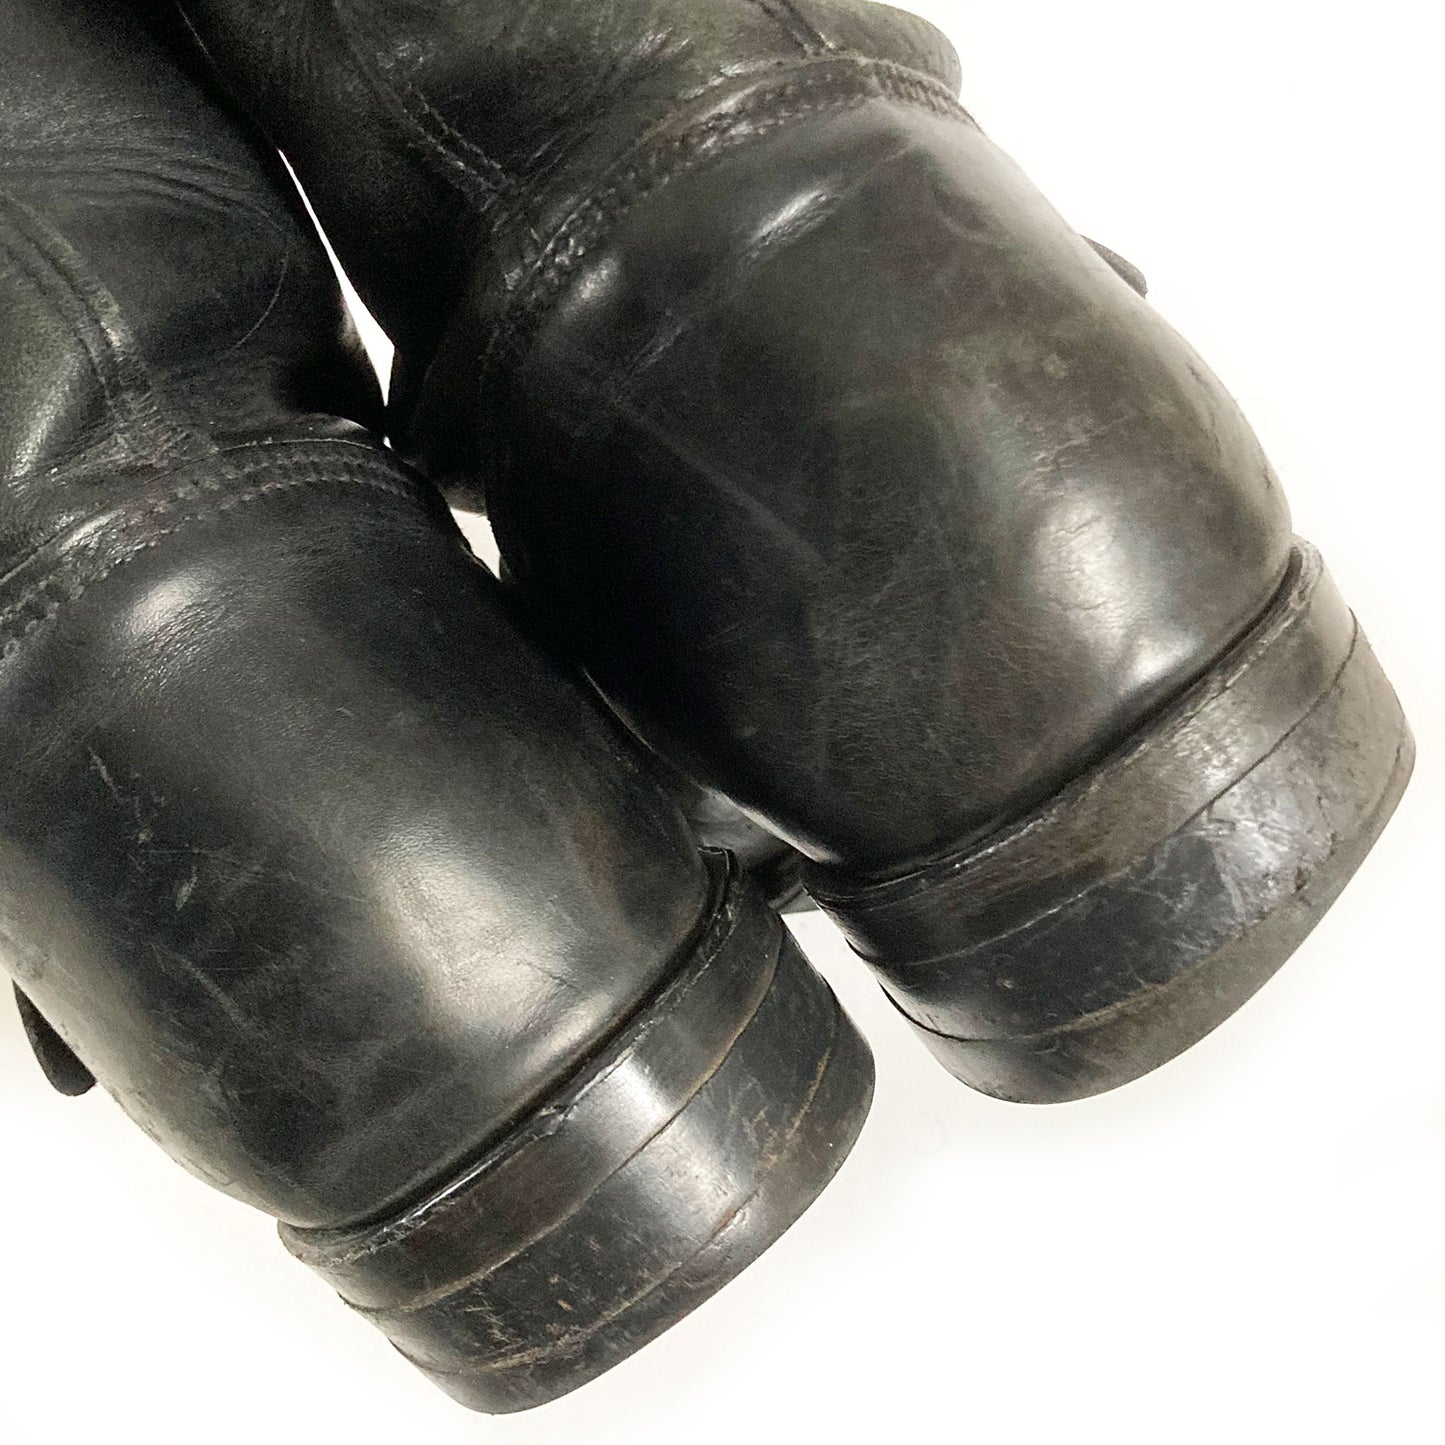 Carolina 902 soft toe leather engineer boots, made in the USA, US 9/UK 8